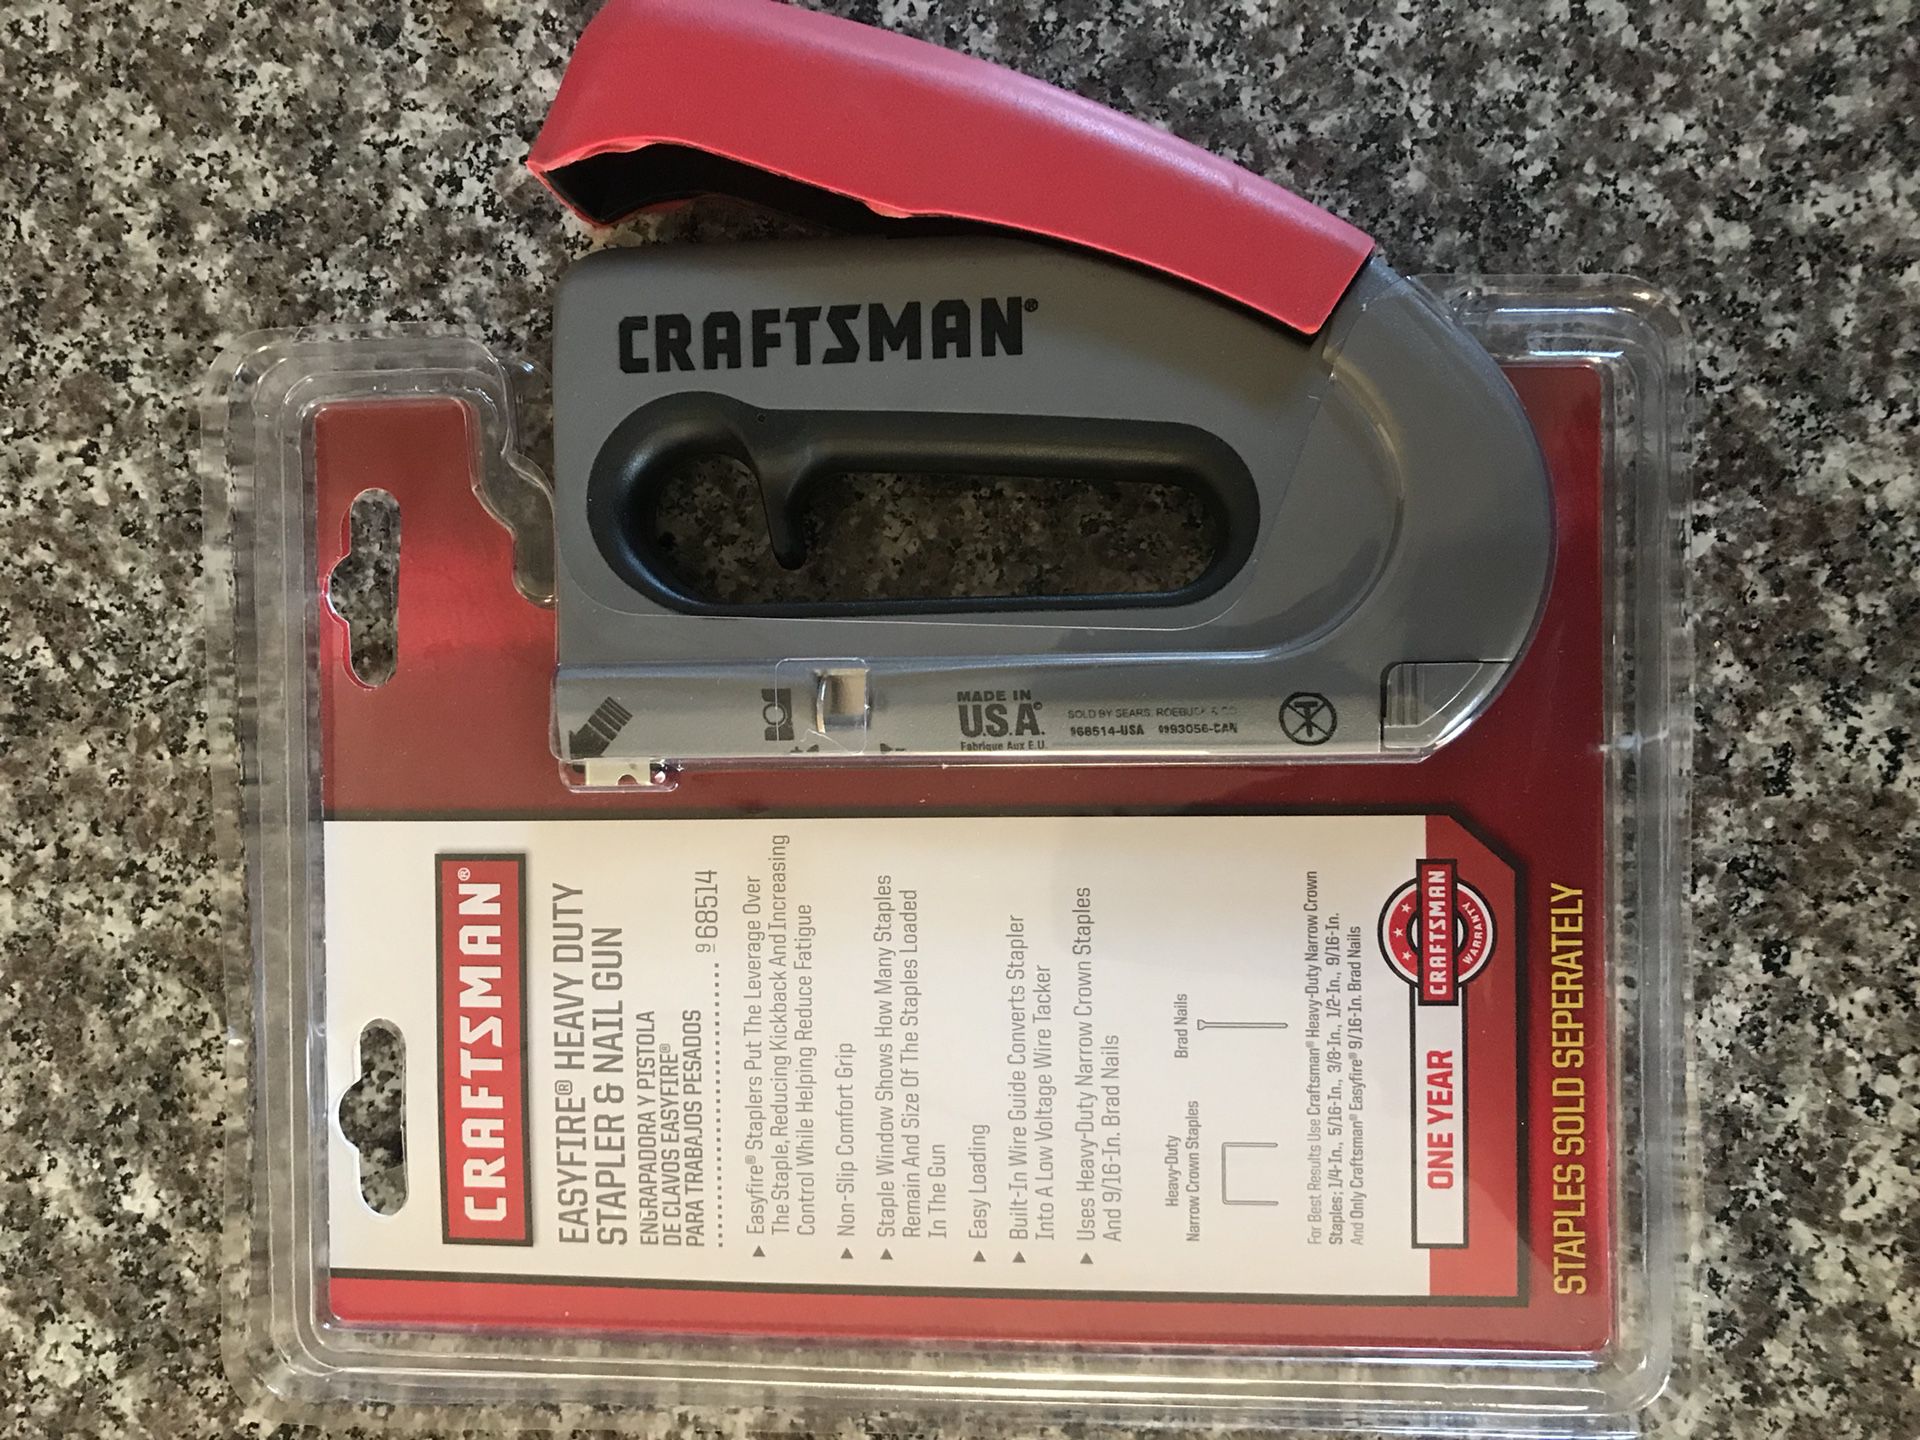 Craftsman Easyfire Heavy Duty Stapler & Nail Gun